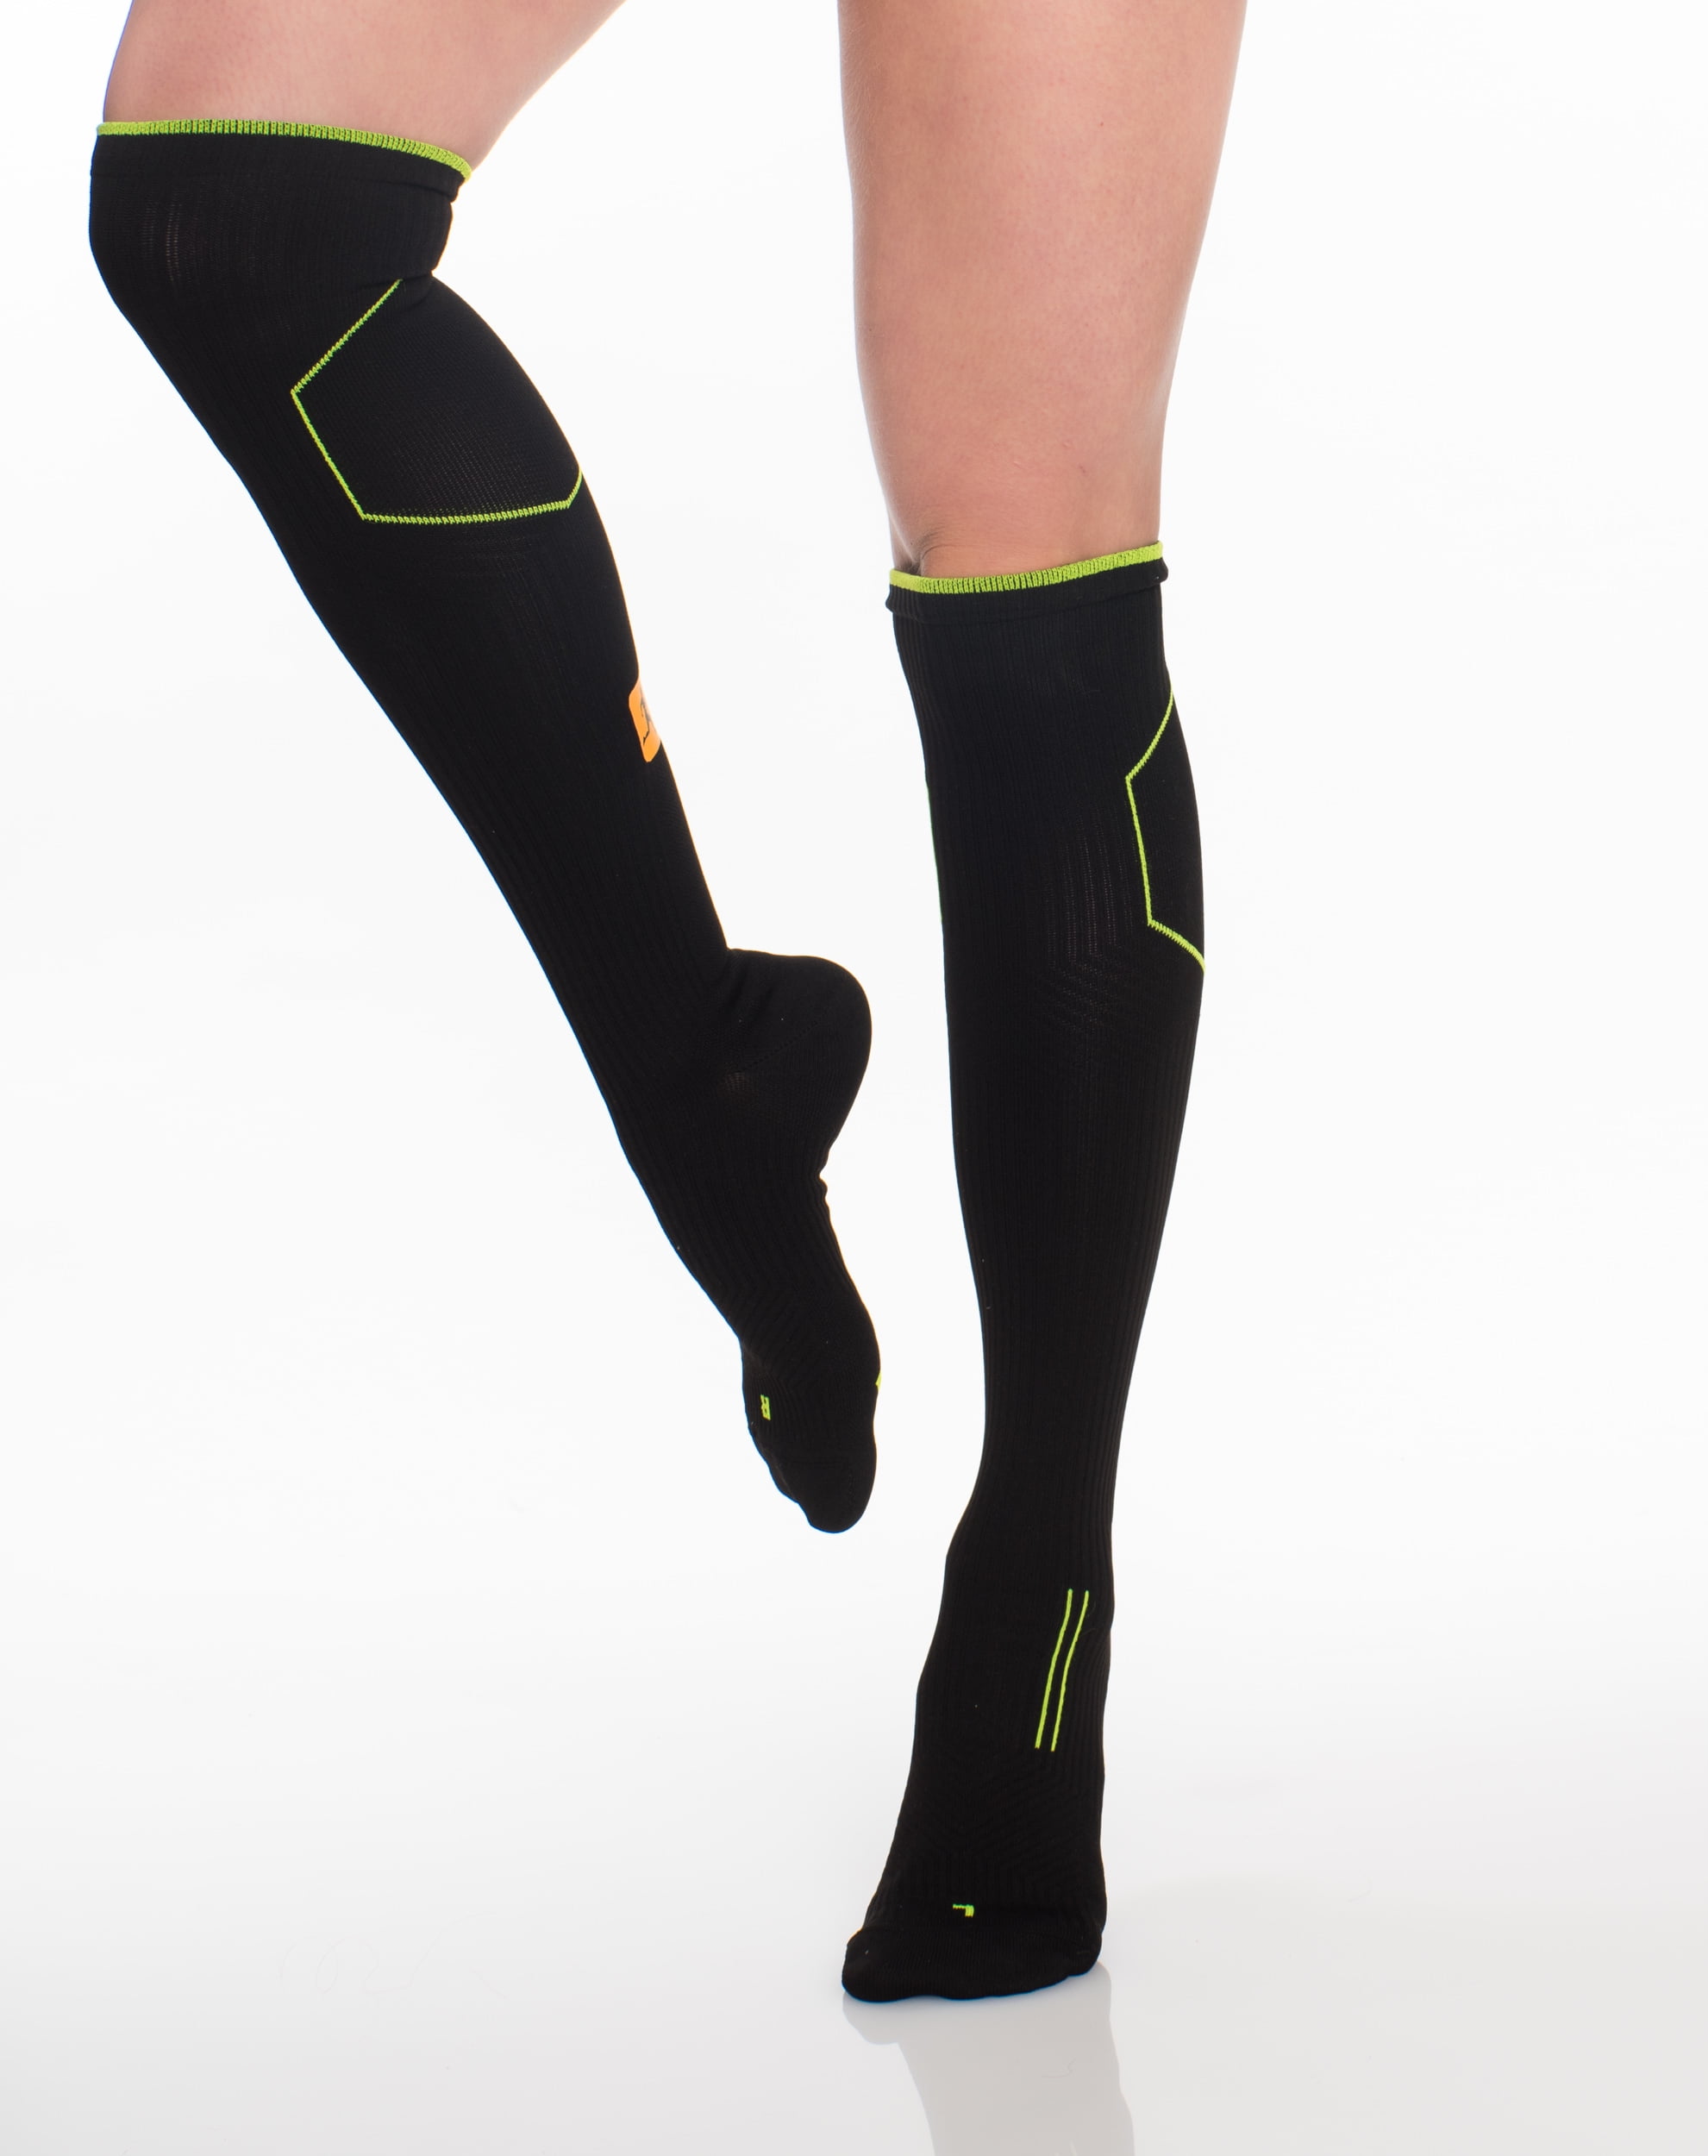 Pioneer Compression Leg Sleeves Calf Shin Splint Women Men Socks